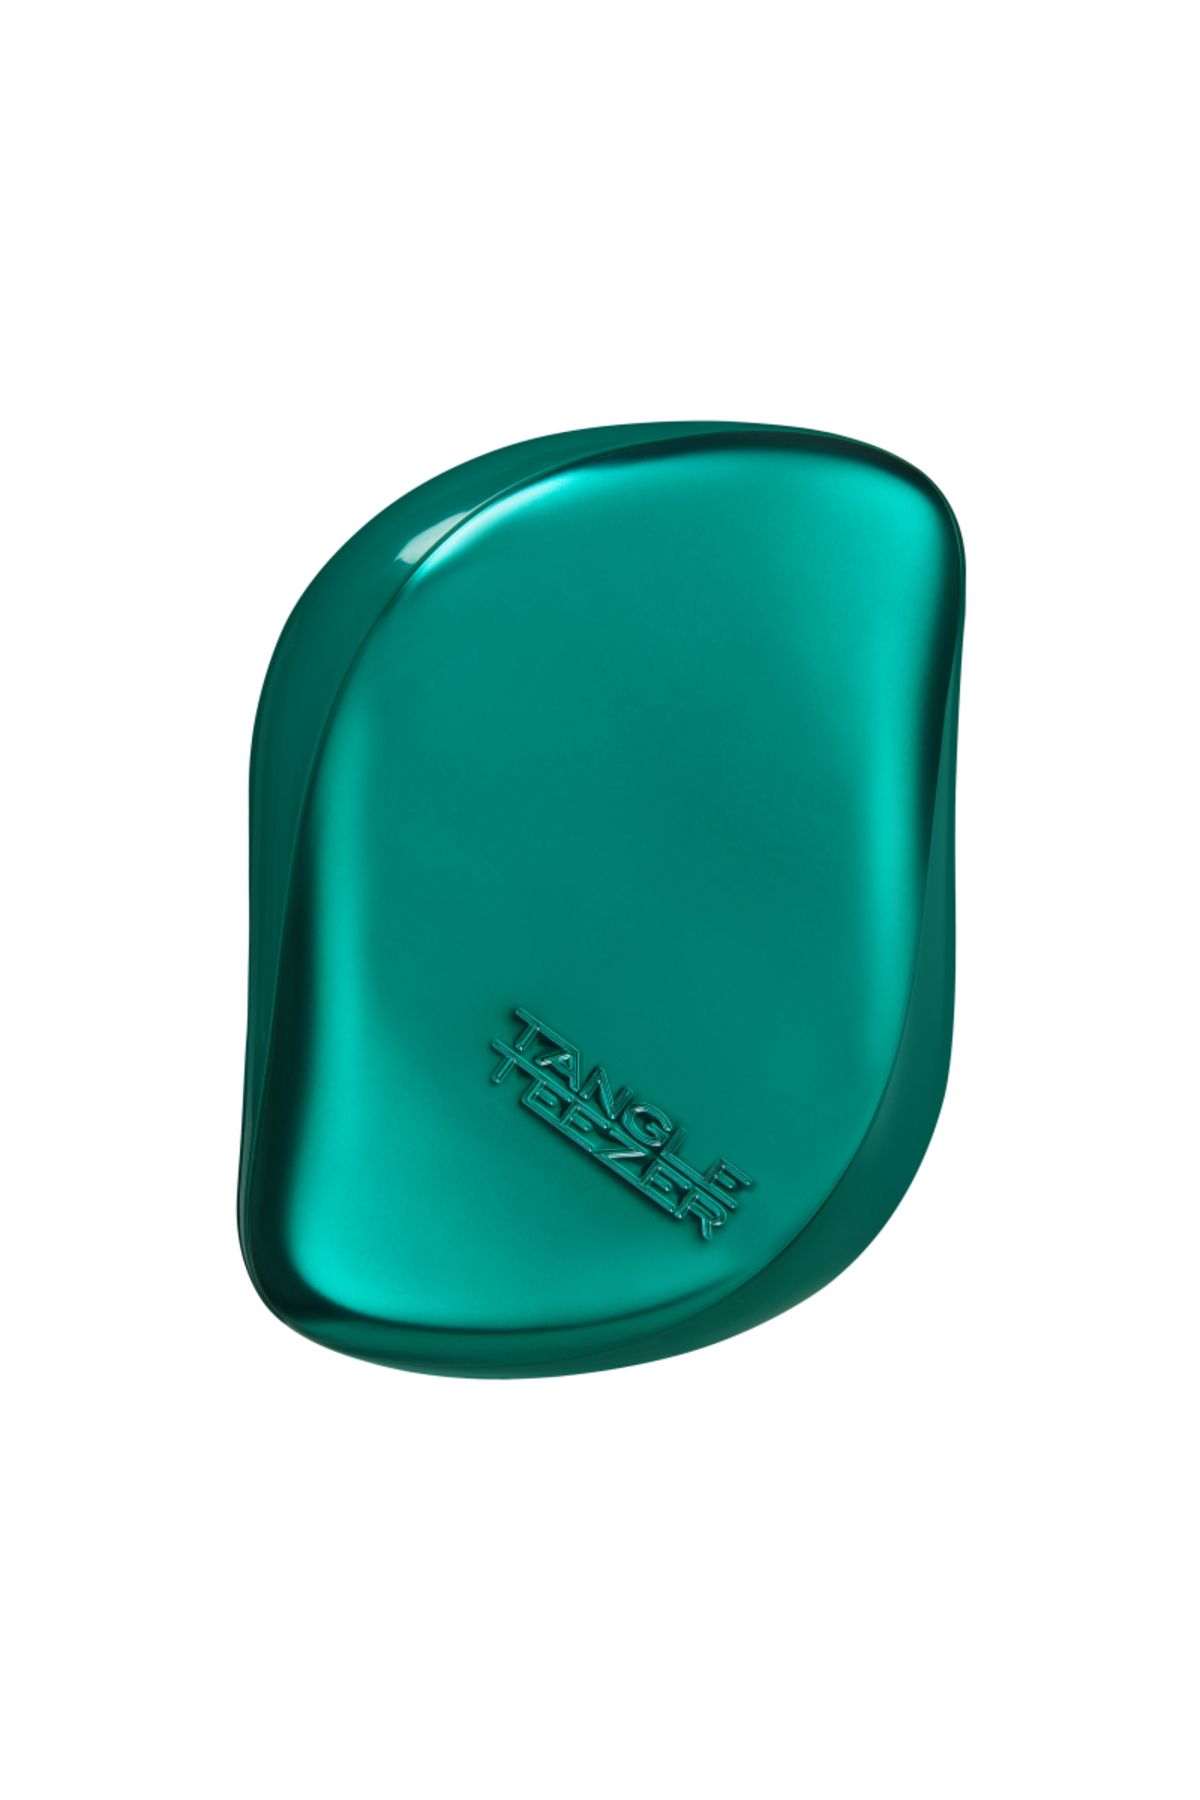 Tangle Teezer Compact Styler - Emerald Green